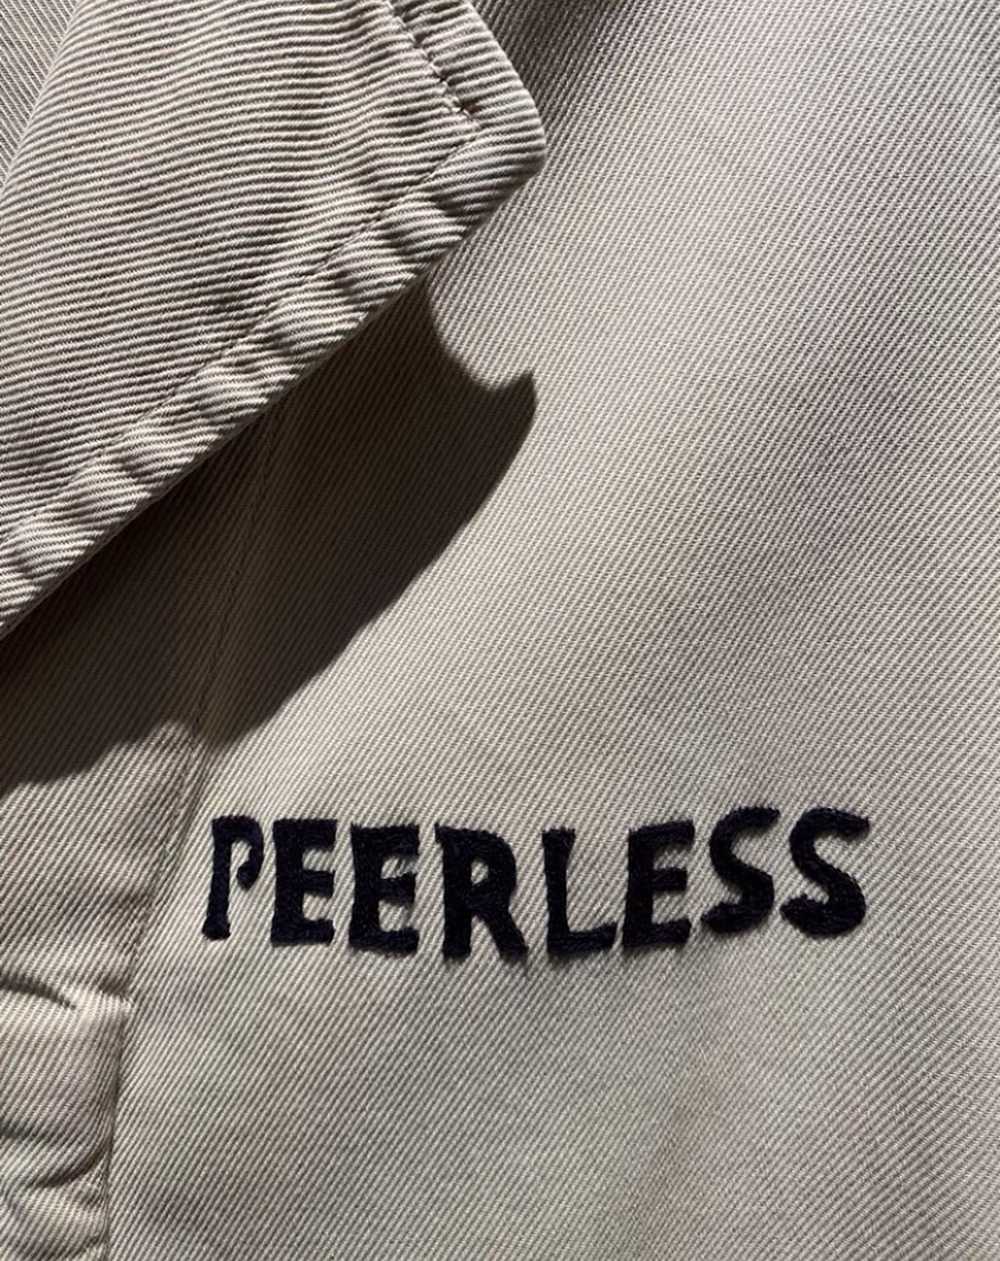 Visvim Visvim 18Aw Peerless Shop Coat - image 5